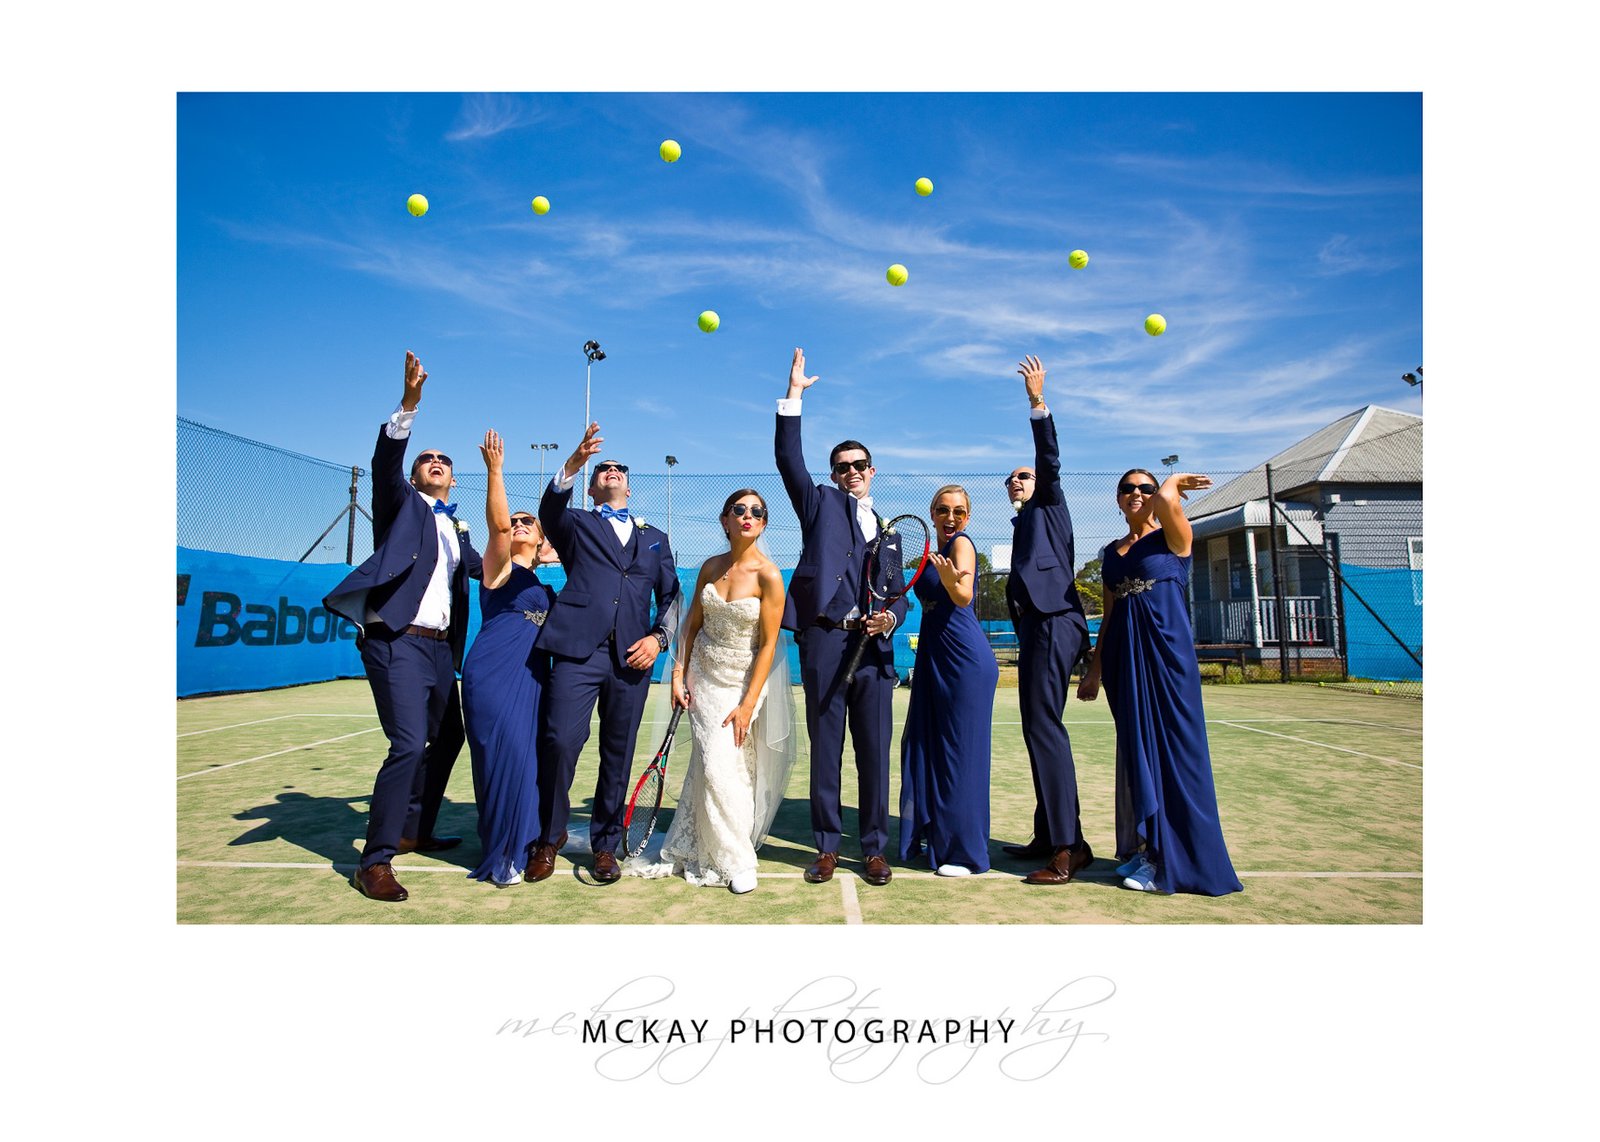 Bridal party tennis balls photo